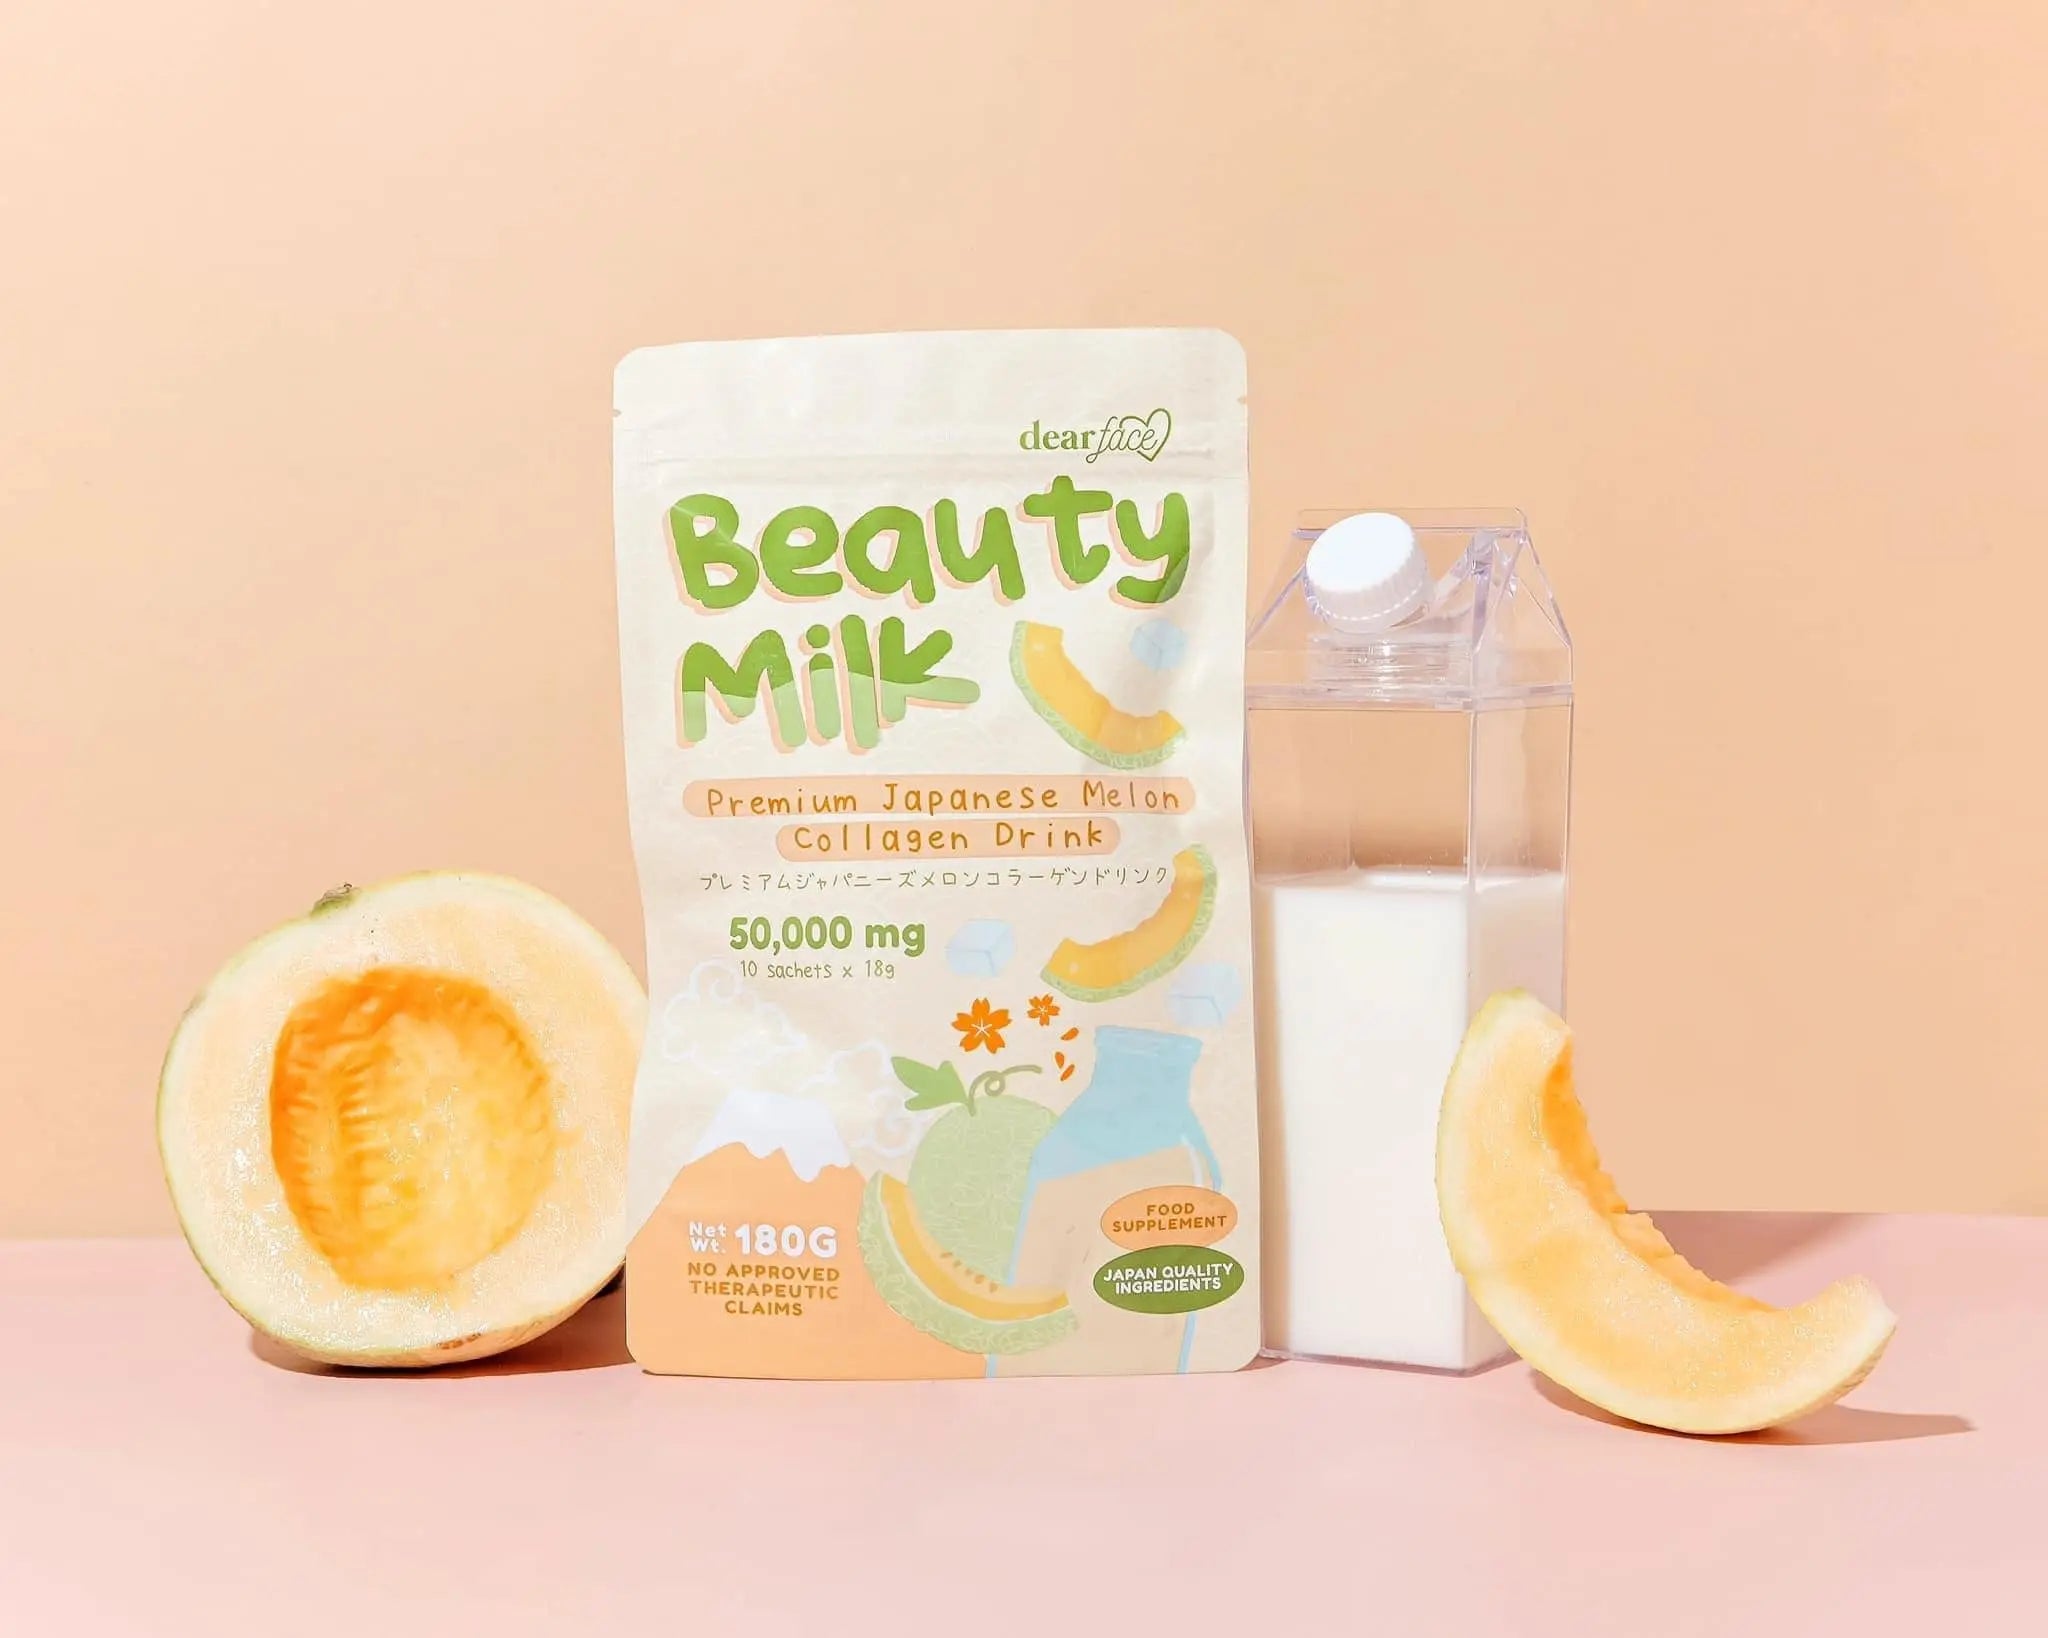 Dear Face Beauty Milk Premium Japanese Melon Collagen Drink | Love ...